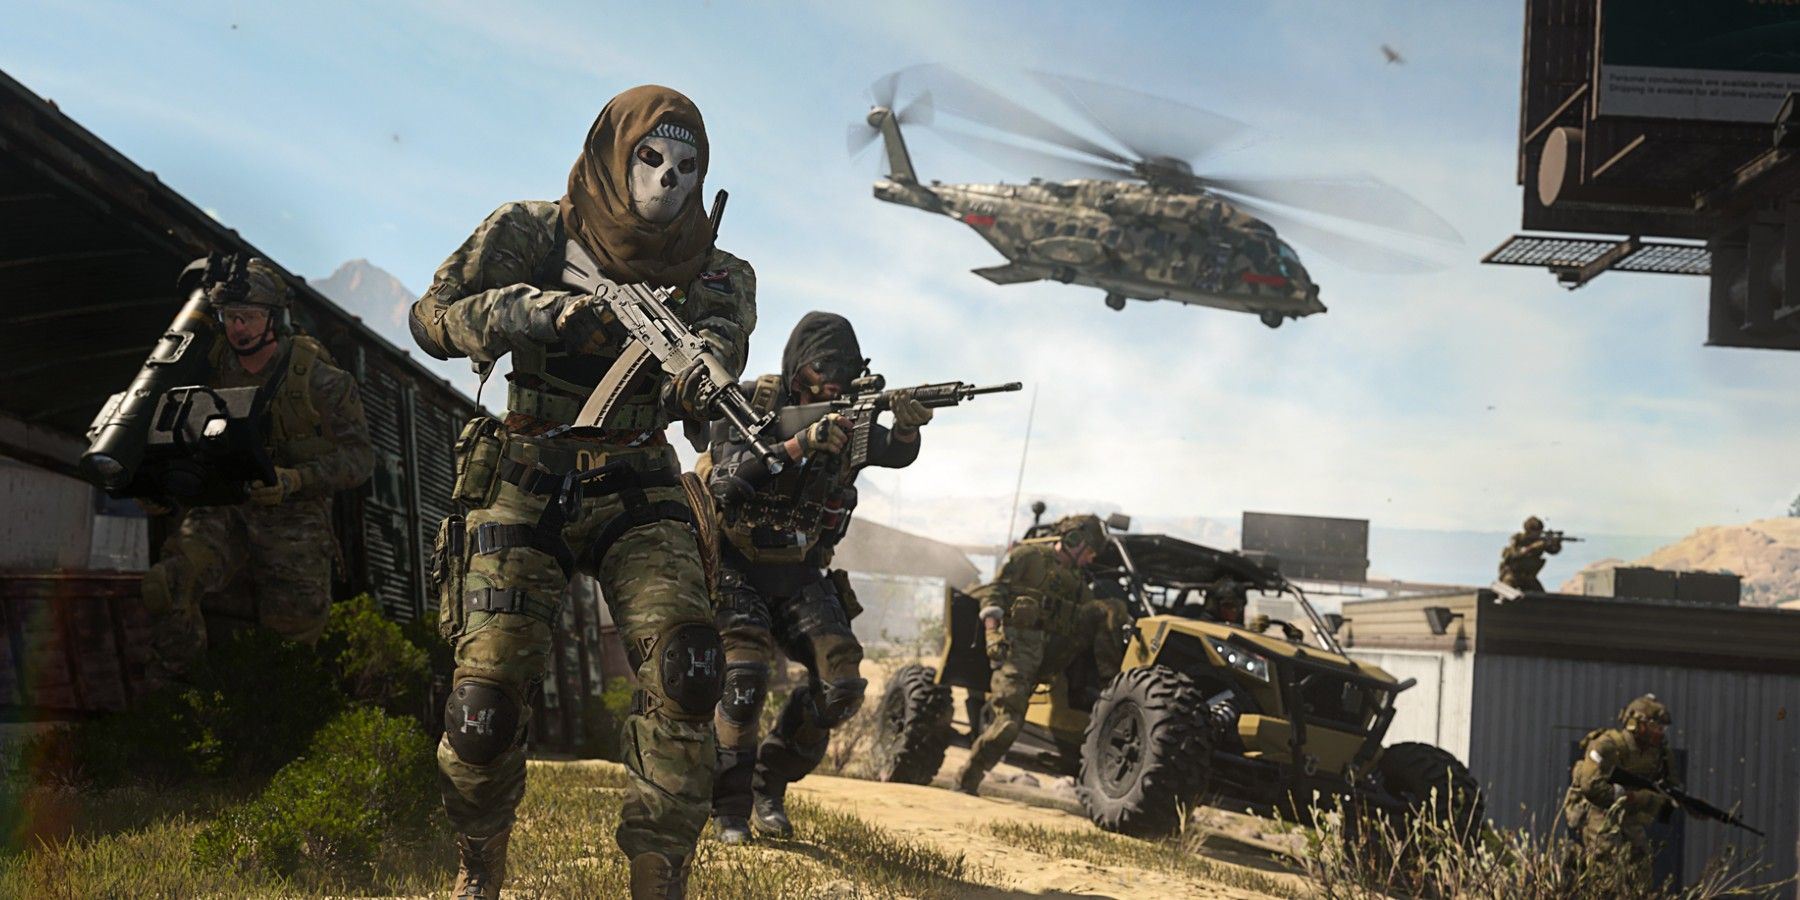 Incredible Call of Duty Modern Warfare 2 Clip Spotlights Battlefield-Like Helicopter Moment